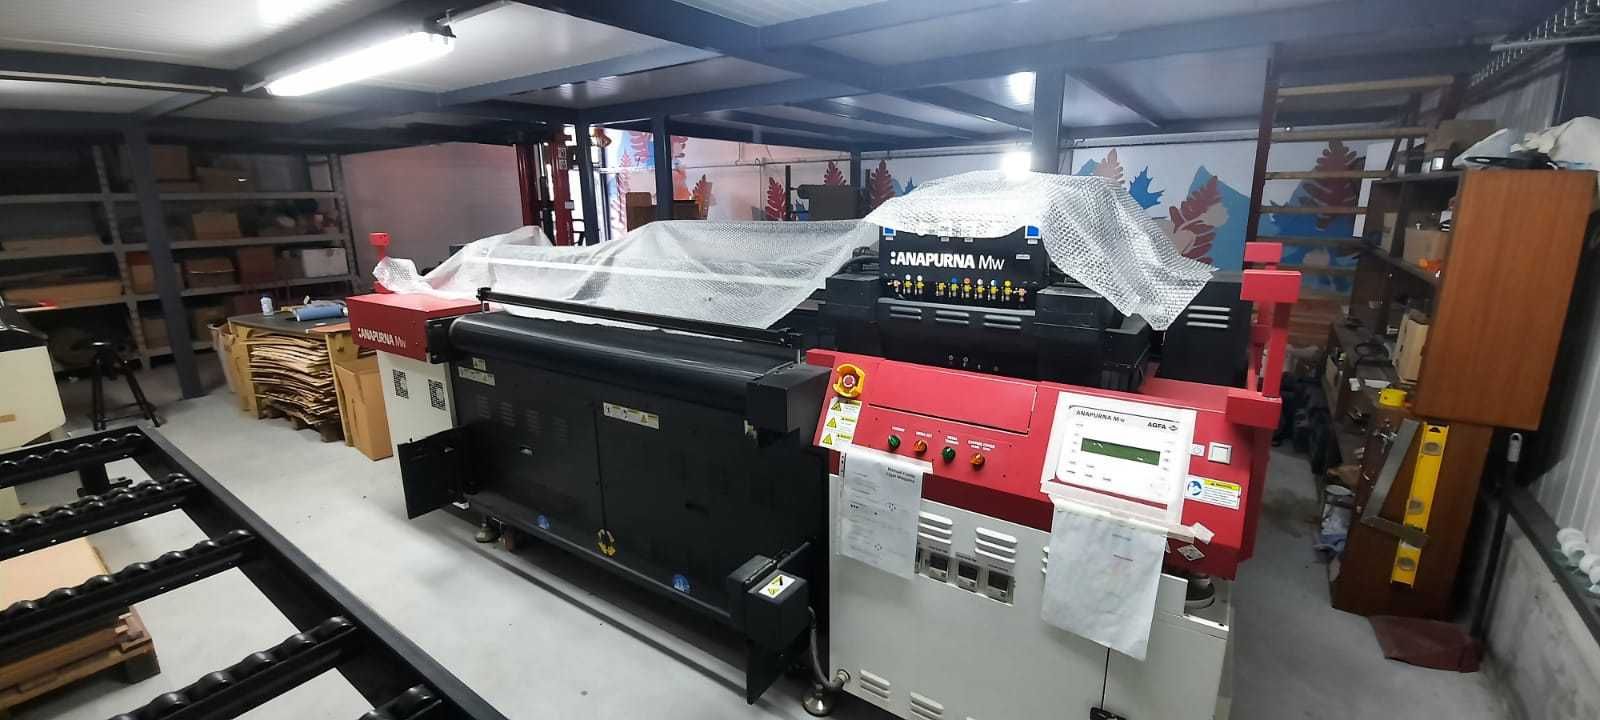 Impressora UV - Agfa Anapurna MW
Largura 155cm / Ano 2013